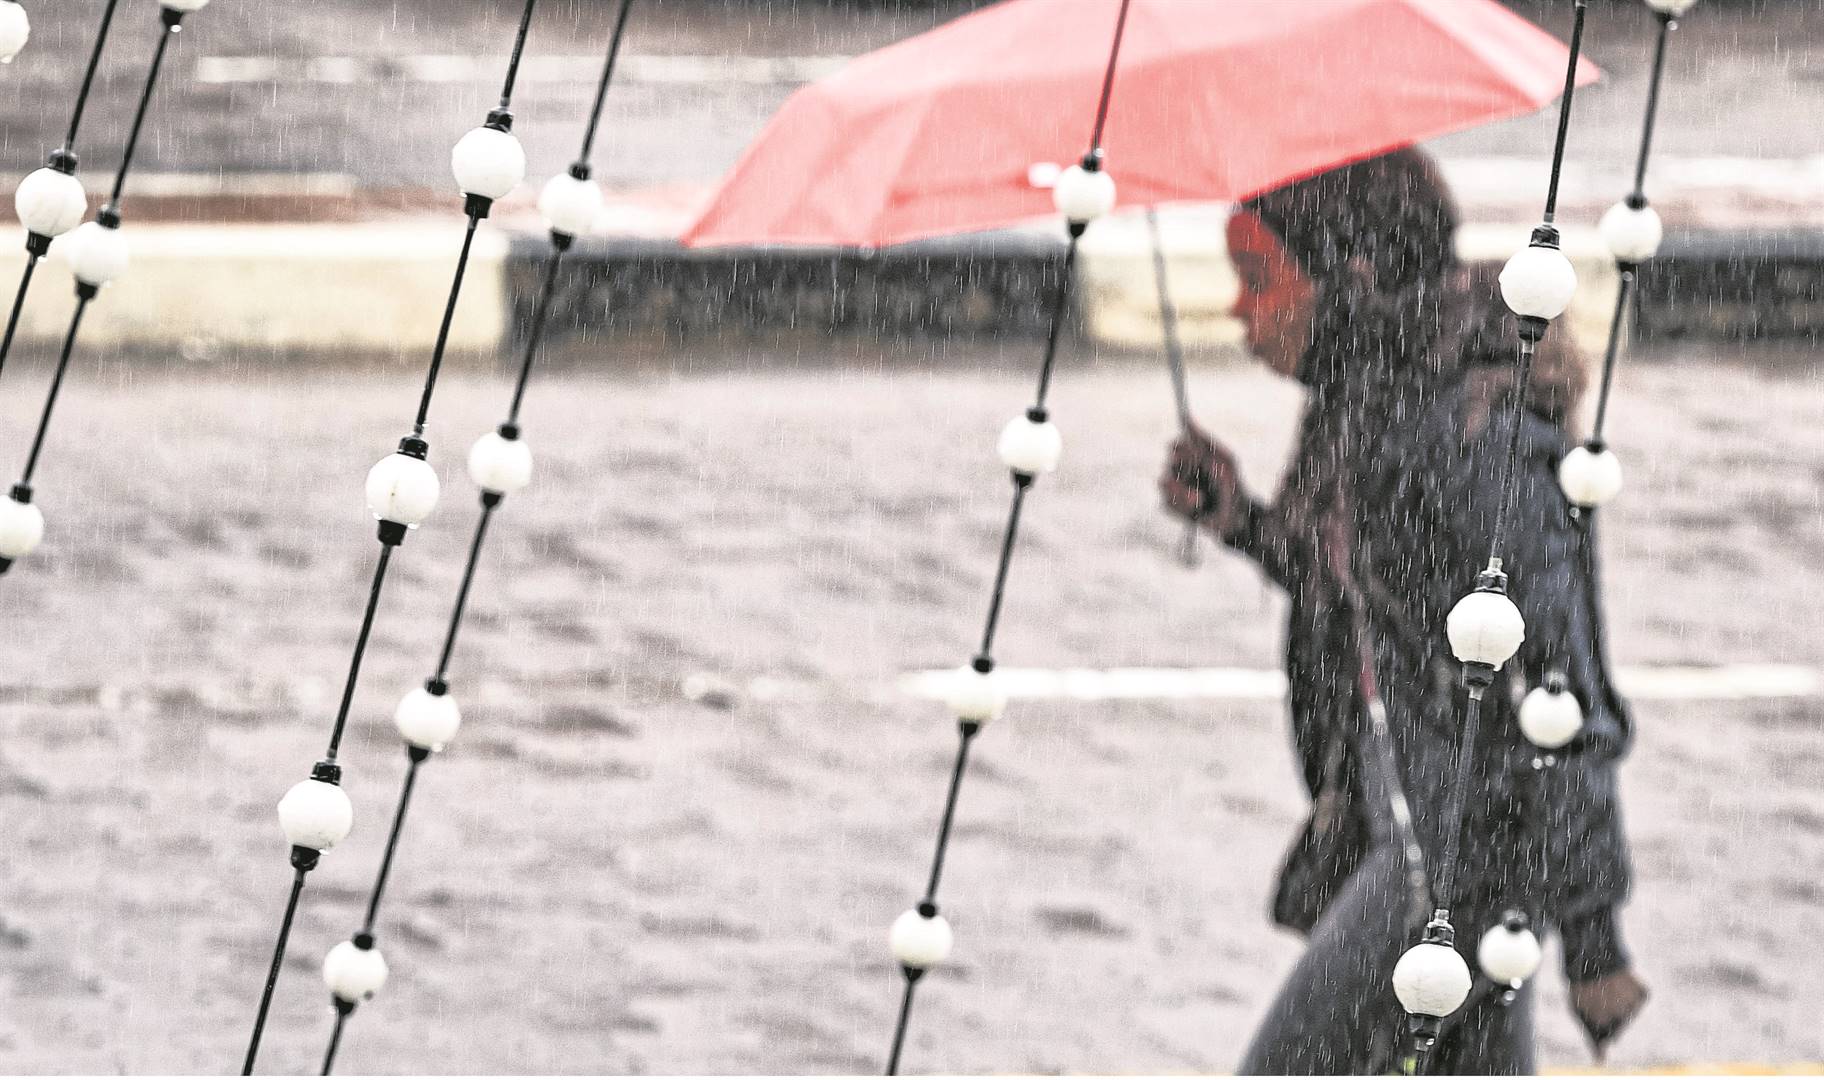  Woman with umbrella walks in the rain.